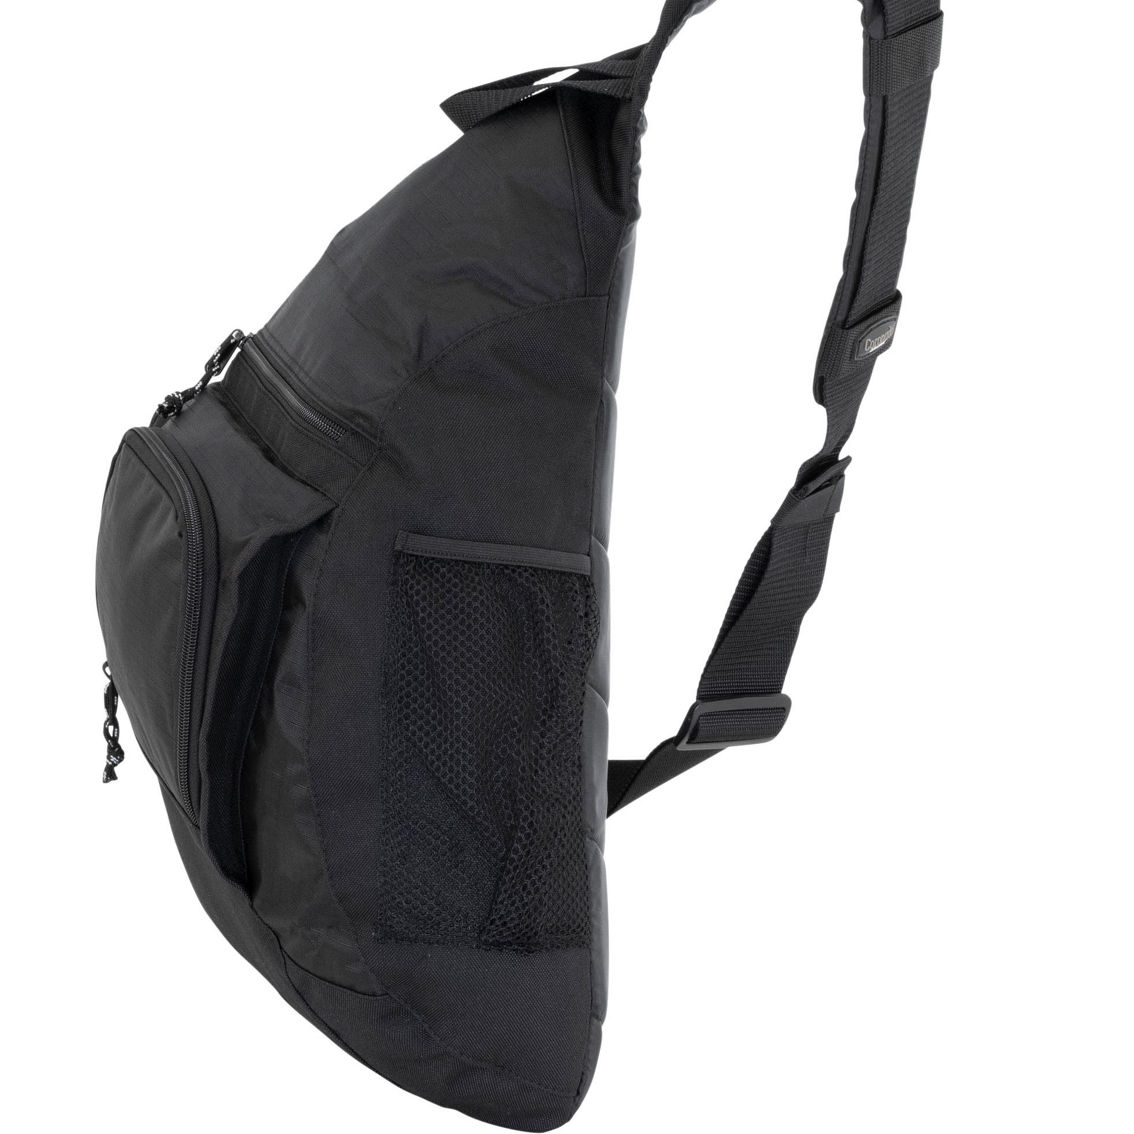 Mercury Luggage Coronado Sling Bag, Black - Image 4 of 7